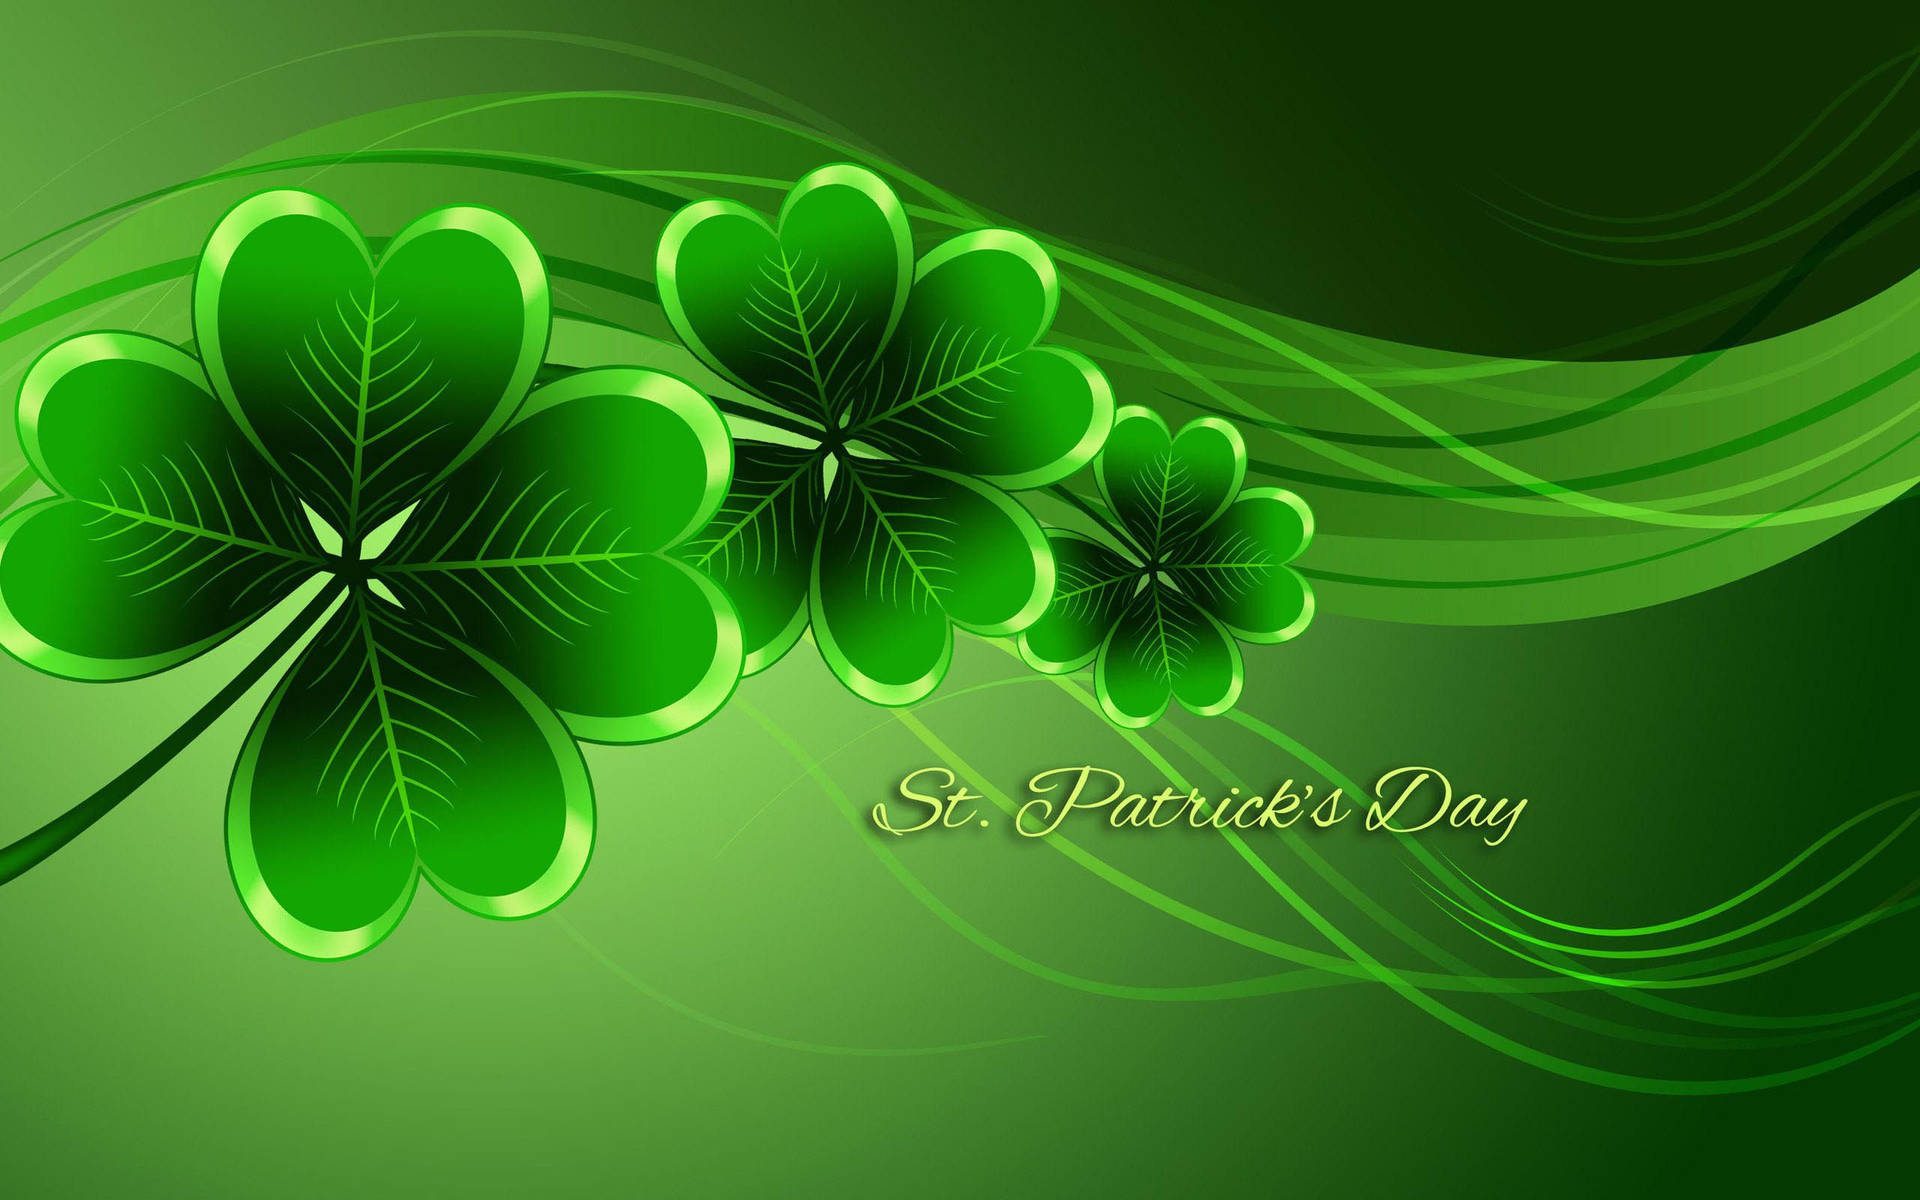 St Patrick's Day Clover Digital Art Wallpaper